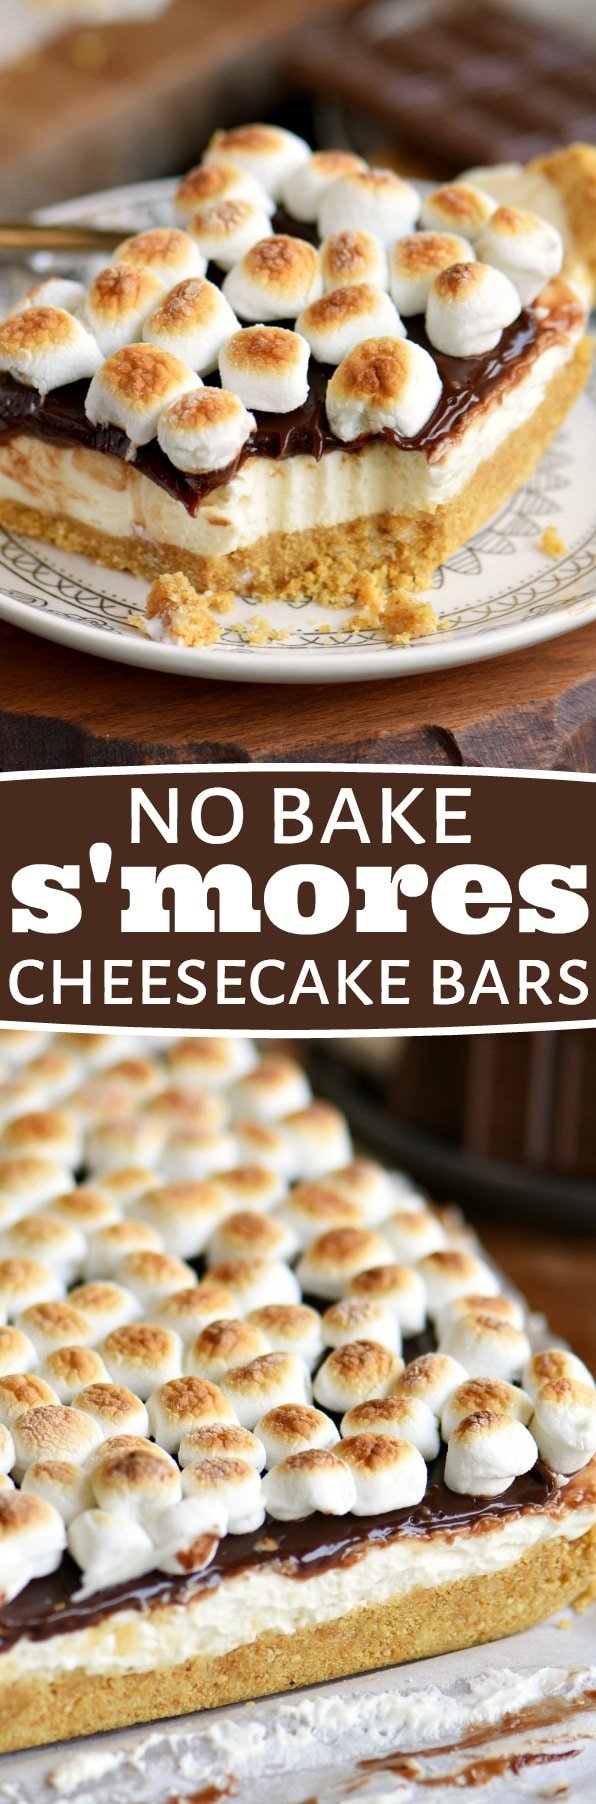 no-bake-smores-cheesecake-bars-graham-cracker-crust-ganache-topped-roasted-marshamllows